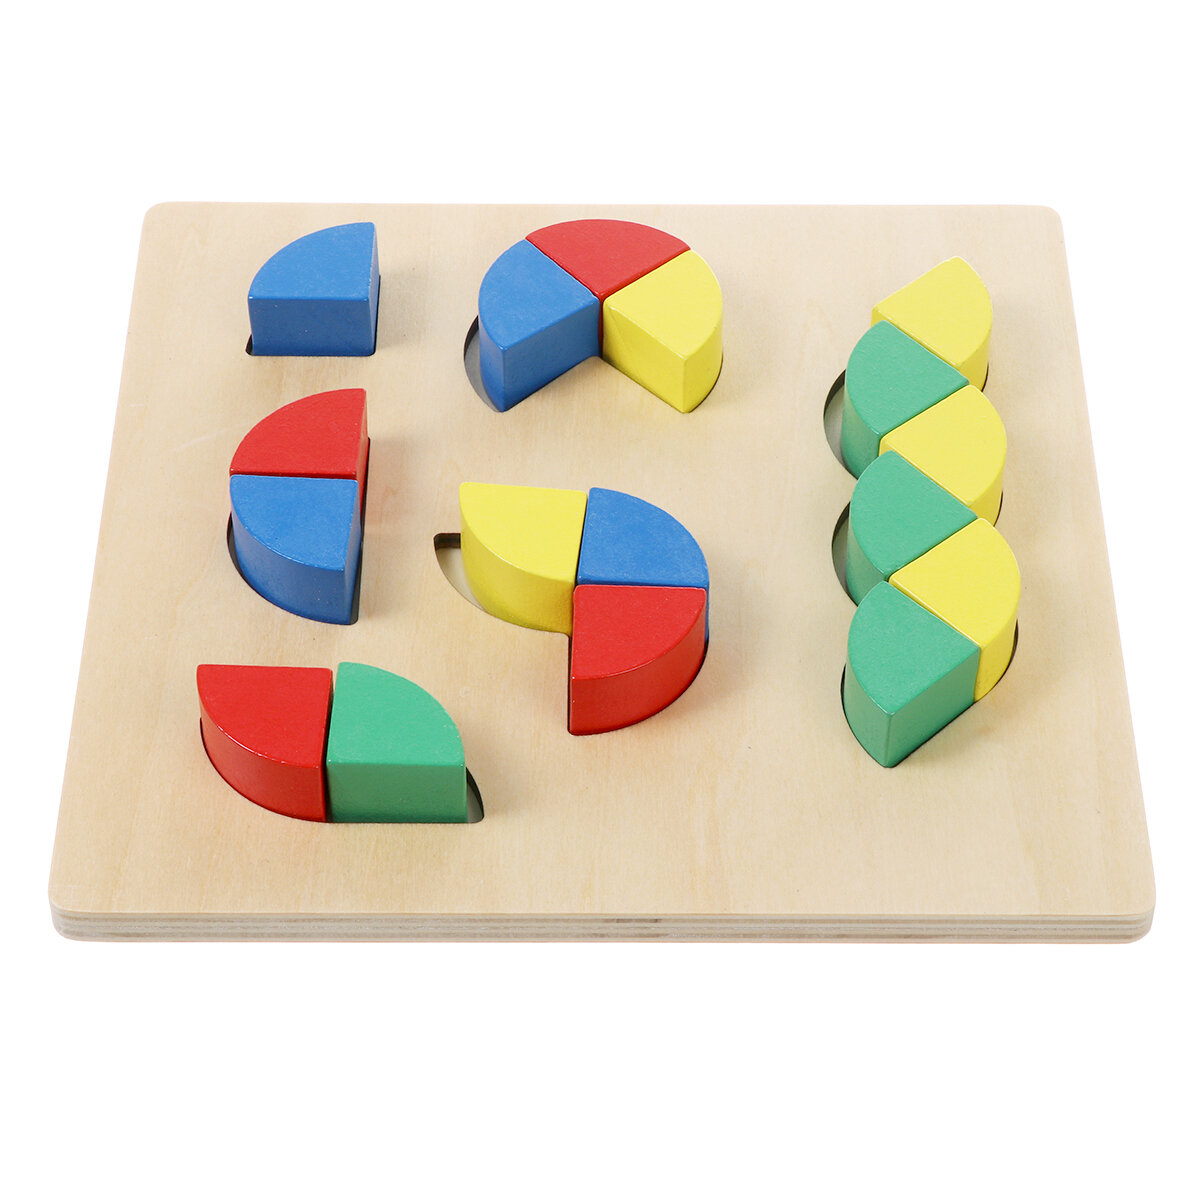 3D Wooden Geometric Blocks Geometric Shapes Puzzle Kids Brain Development Early Educational Toys for